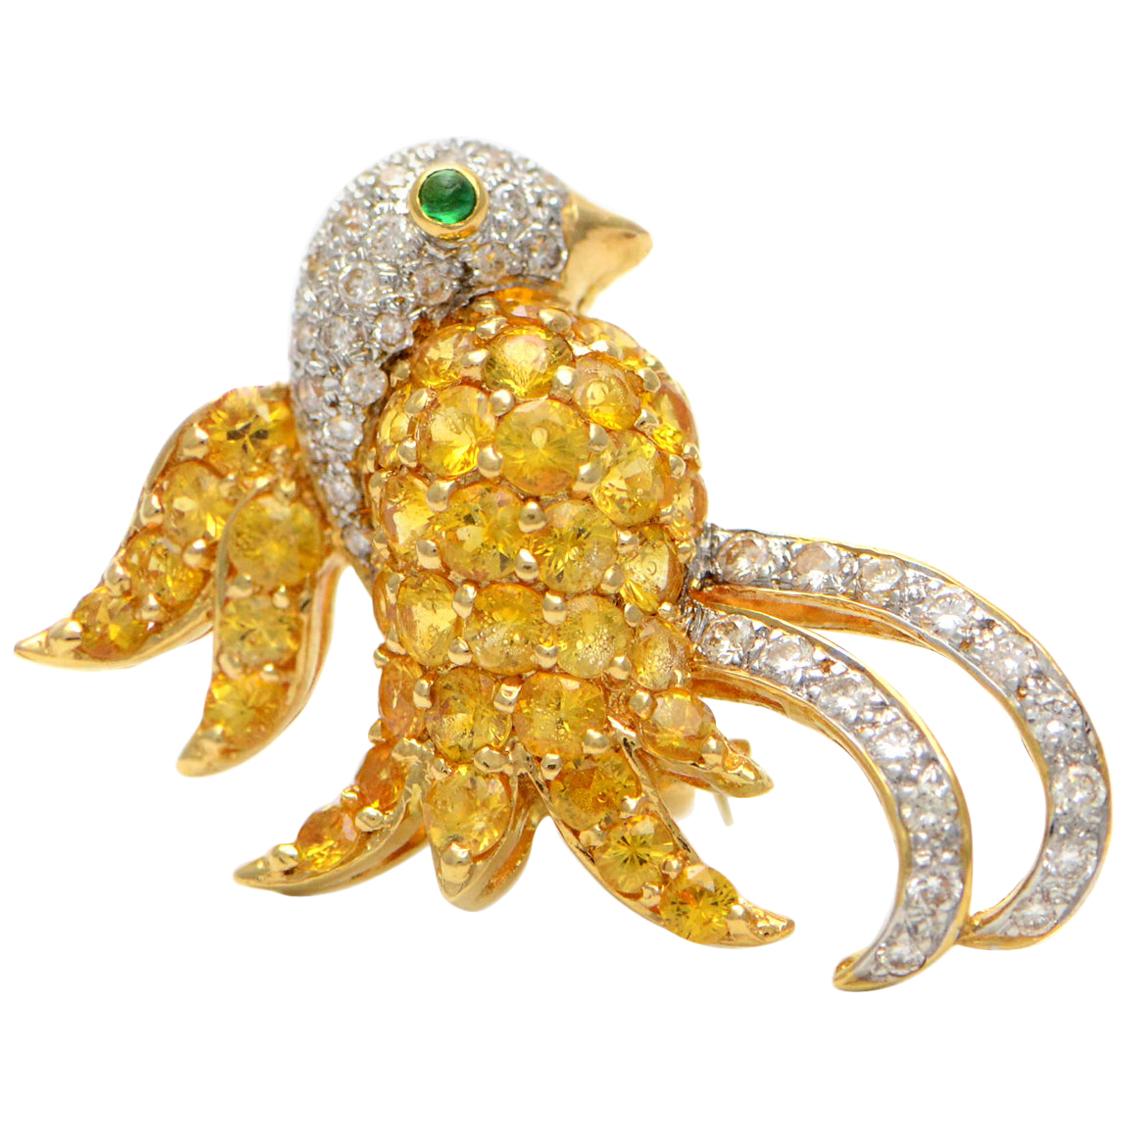 Solid 18K Yellow Gold Bird Brooch with Genuine Diamonds, Citrine & Emerald 10.1g